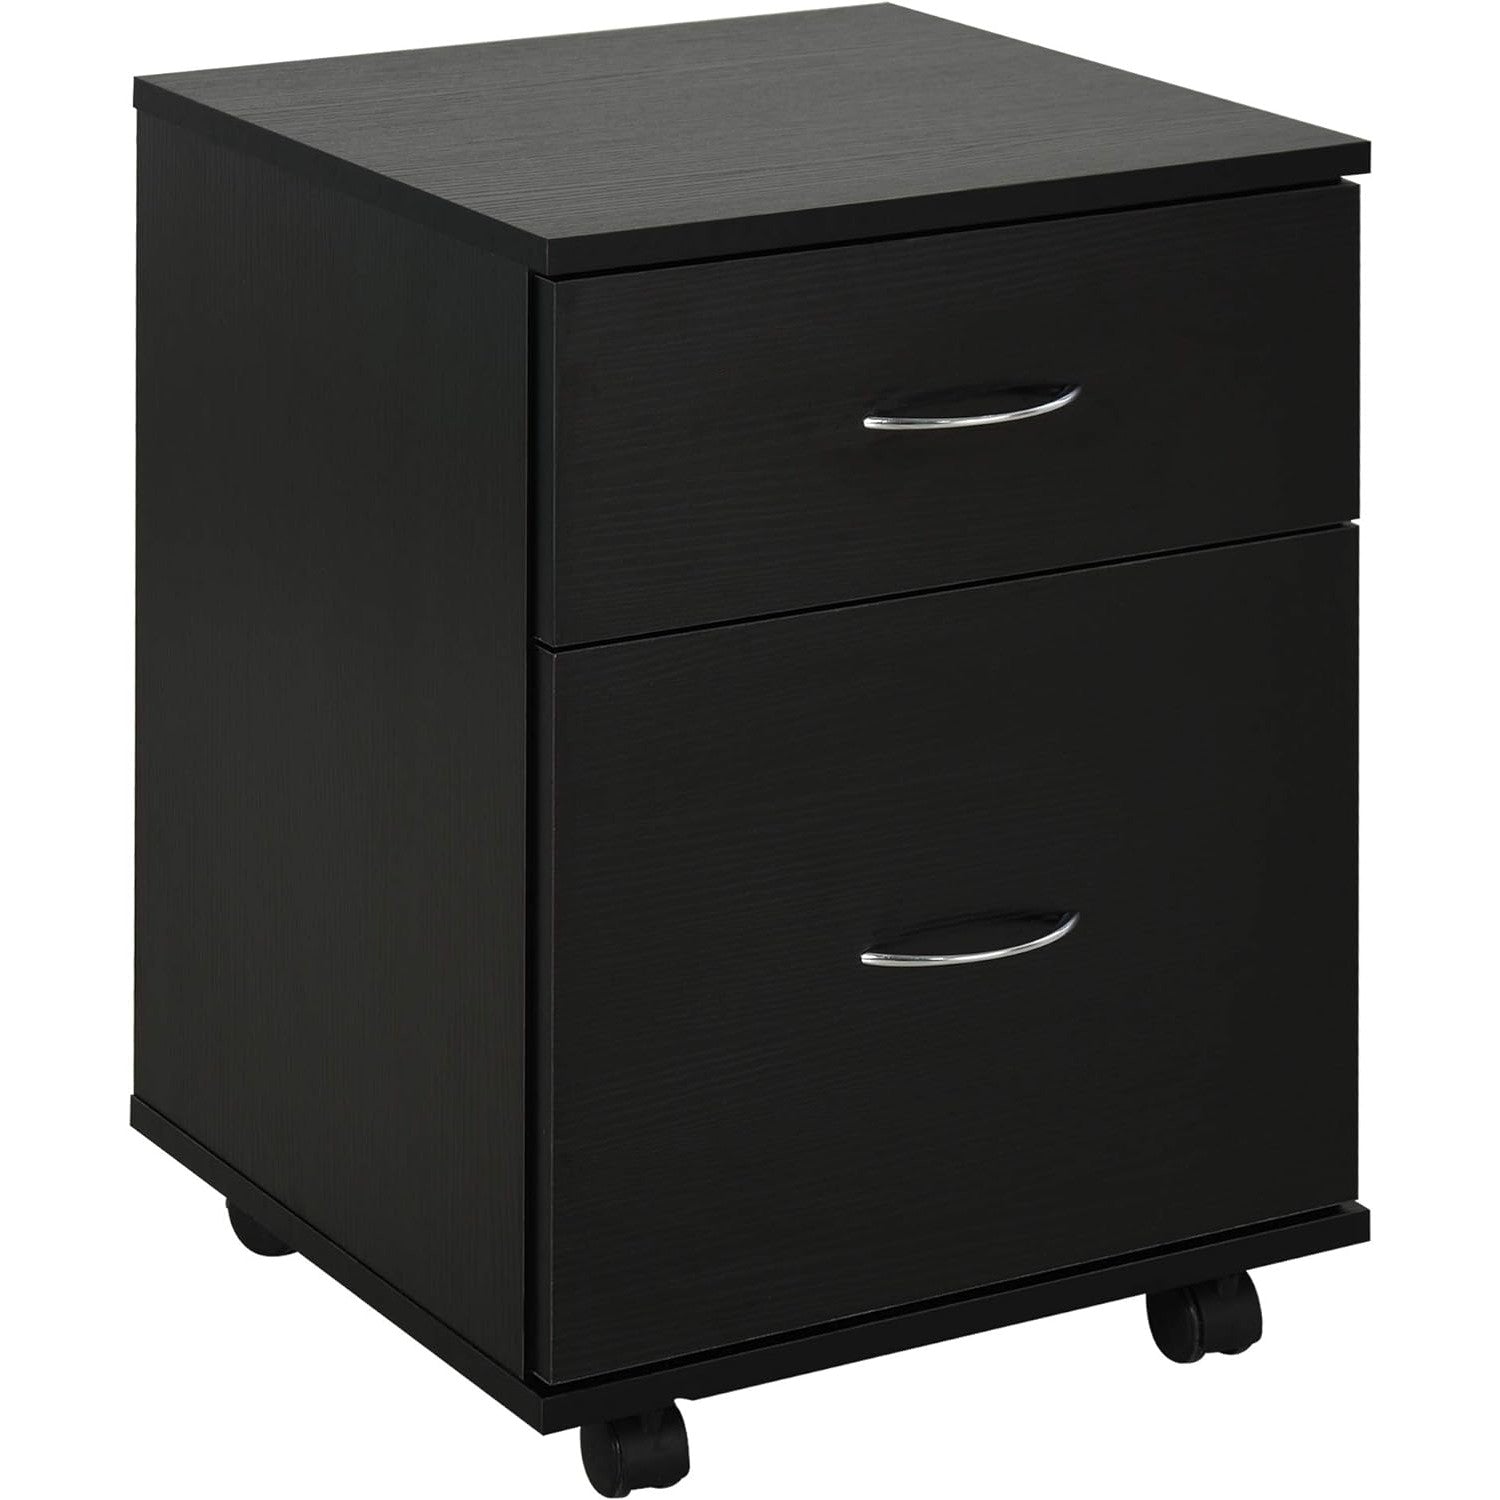 ProperAV 2 Drawer Filing Cabinet Cupboard with Wheels (Black)